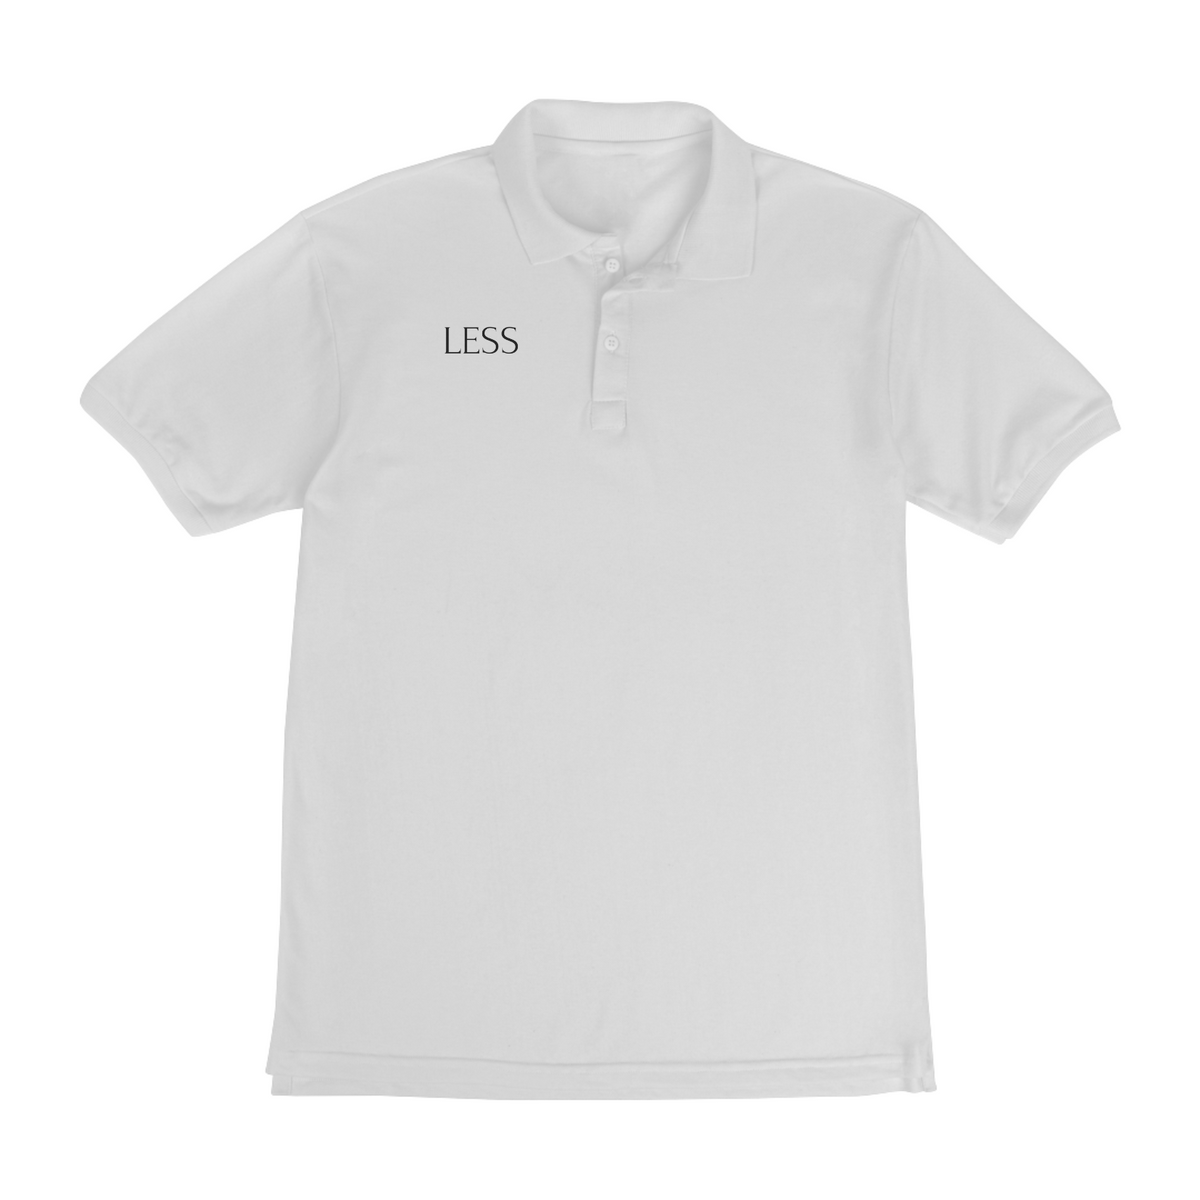 Nome do produto: Camisa Minimalista Polo - Less